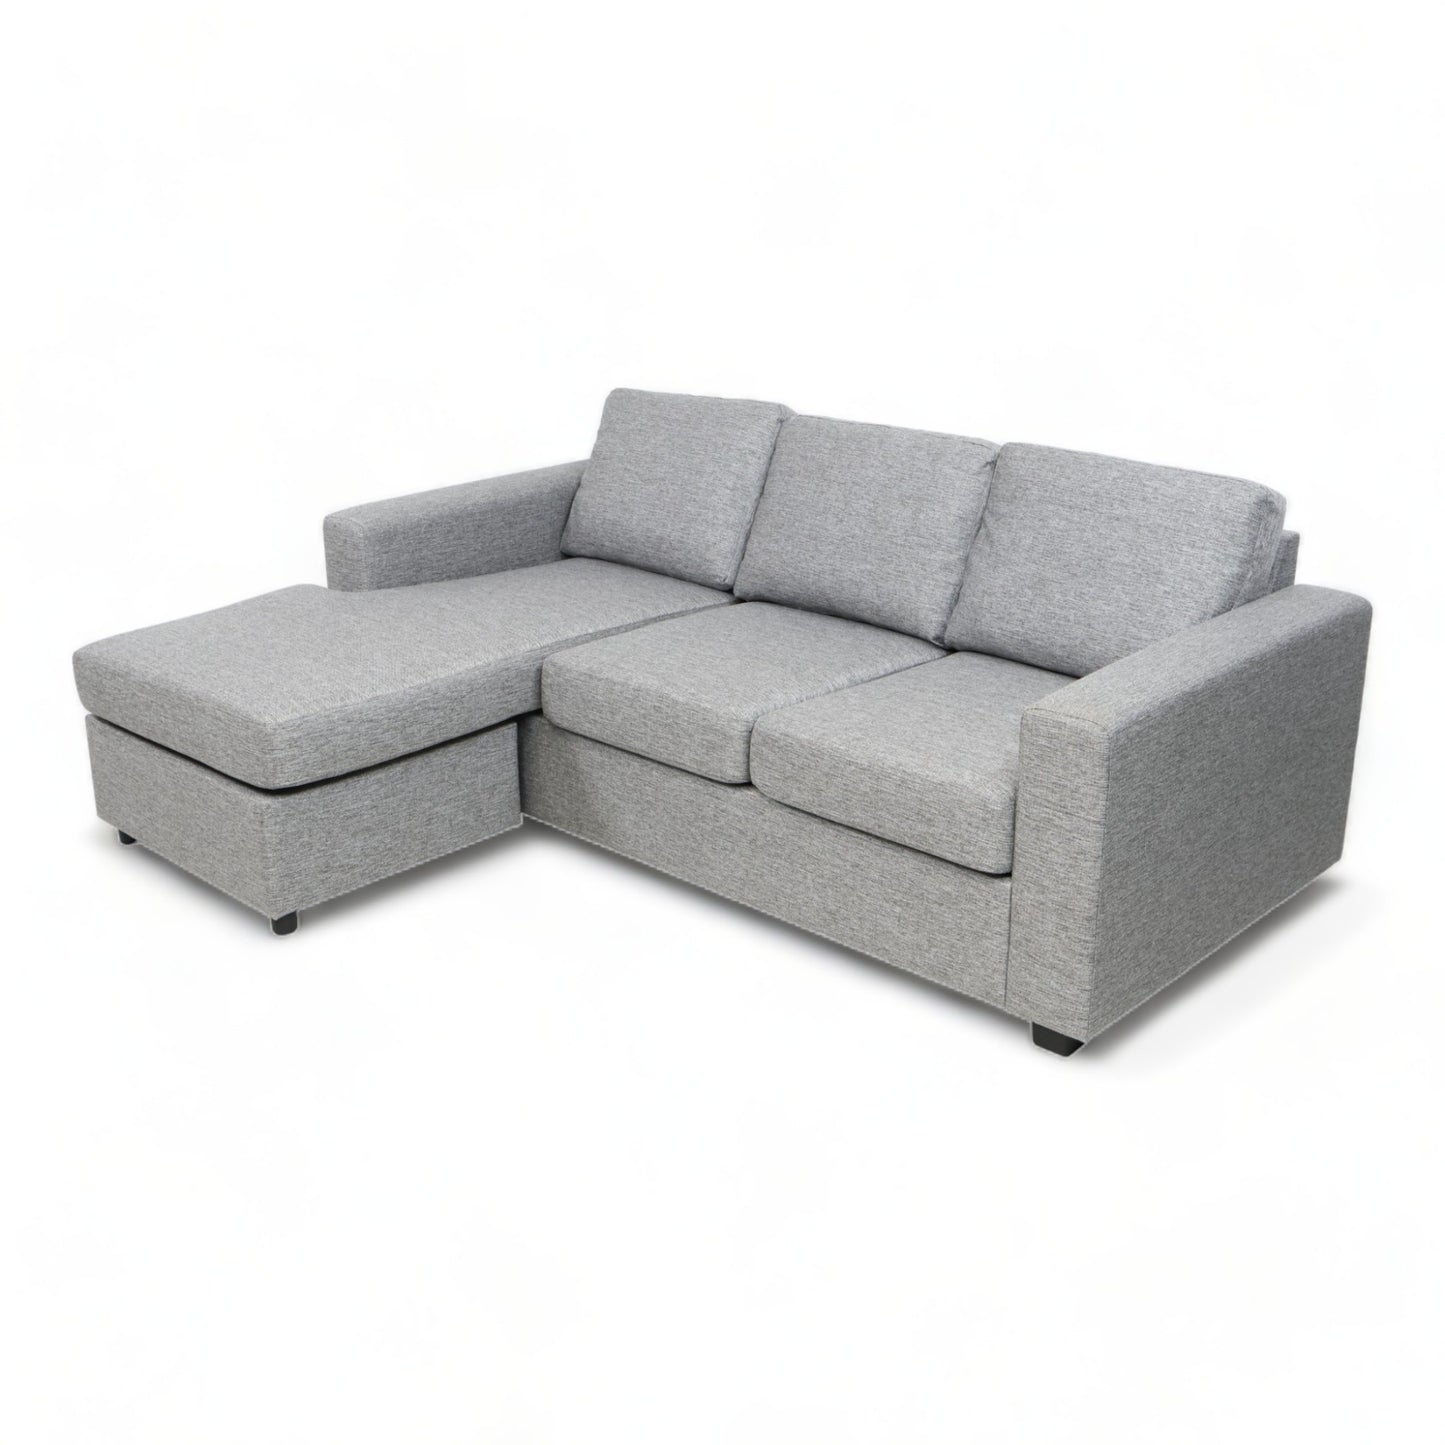 Helt ny | Grå Oslo sofa med sjeselong fra A-Møbler